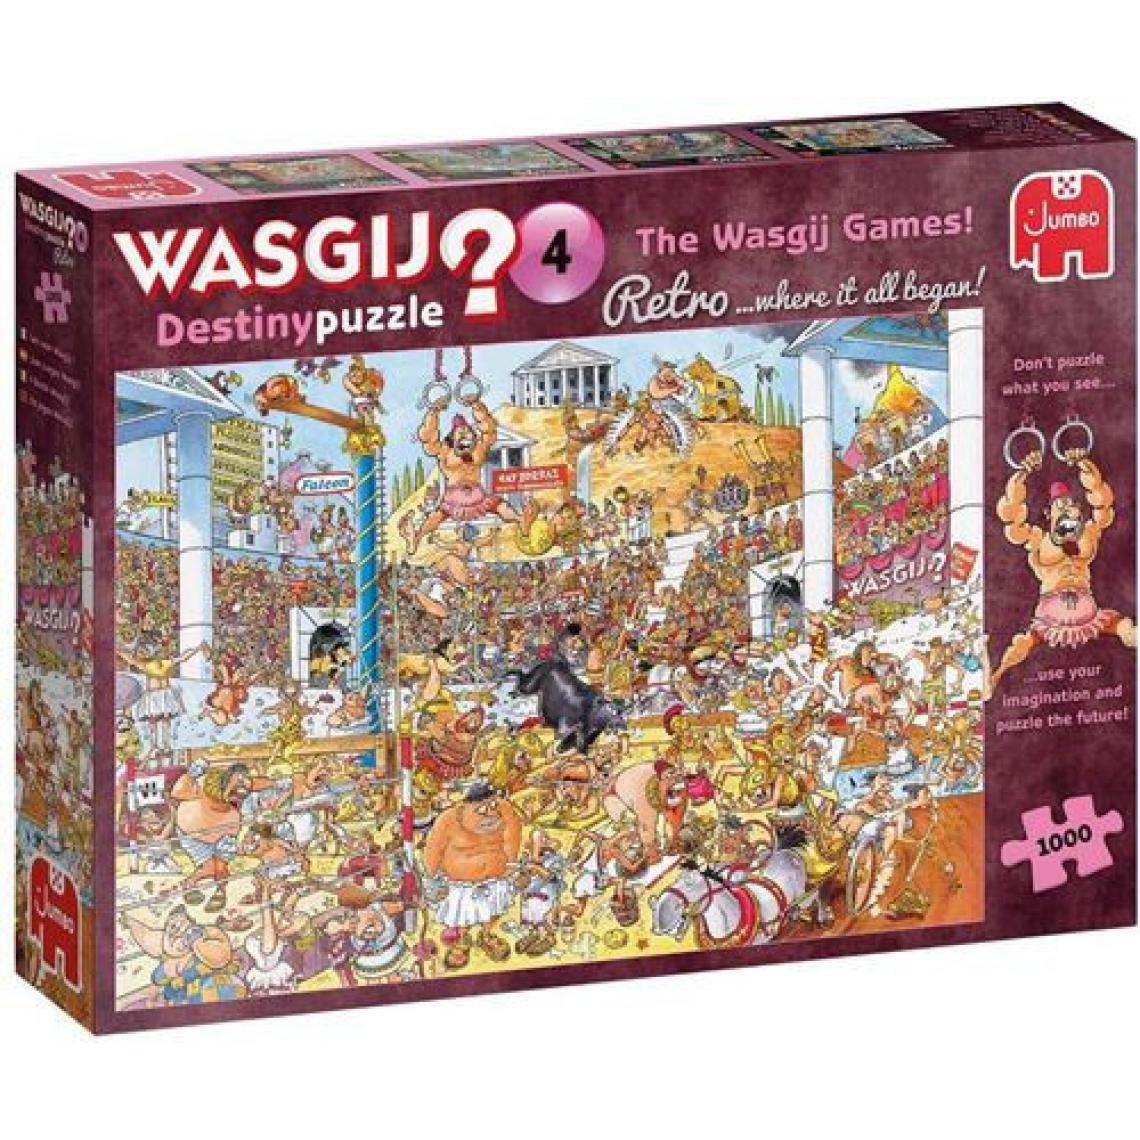 Diset - Puzzle 1000 pièces Diset Wasgij Retro Destiny 4 - Animaux